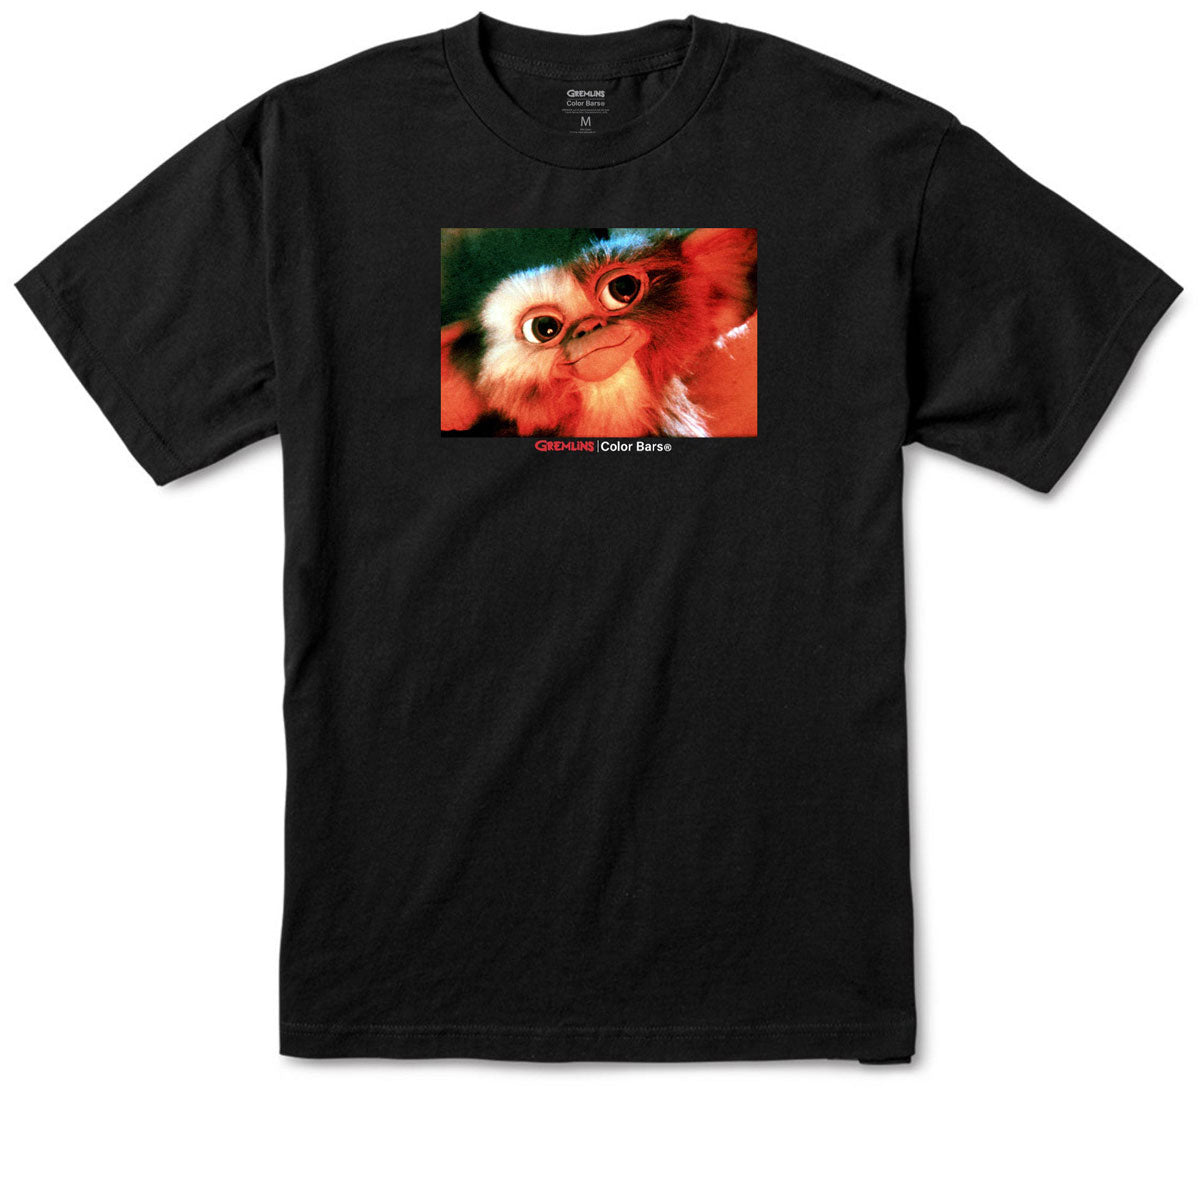 Color Bars x Gremlins Coming Soon T-Shirt - Black image 2